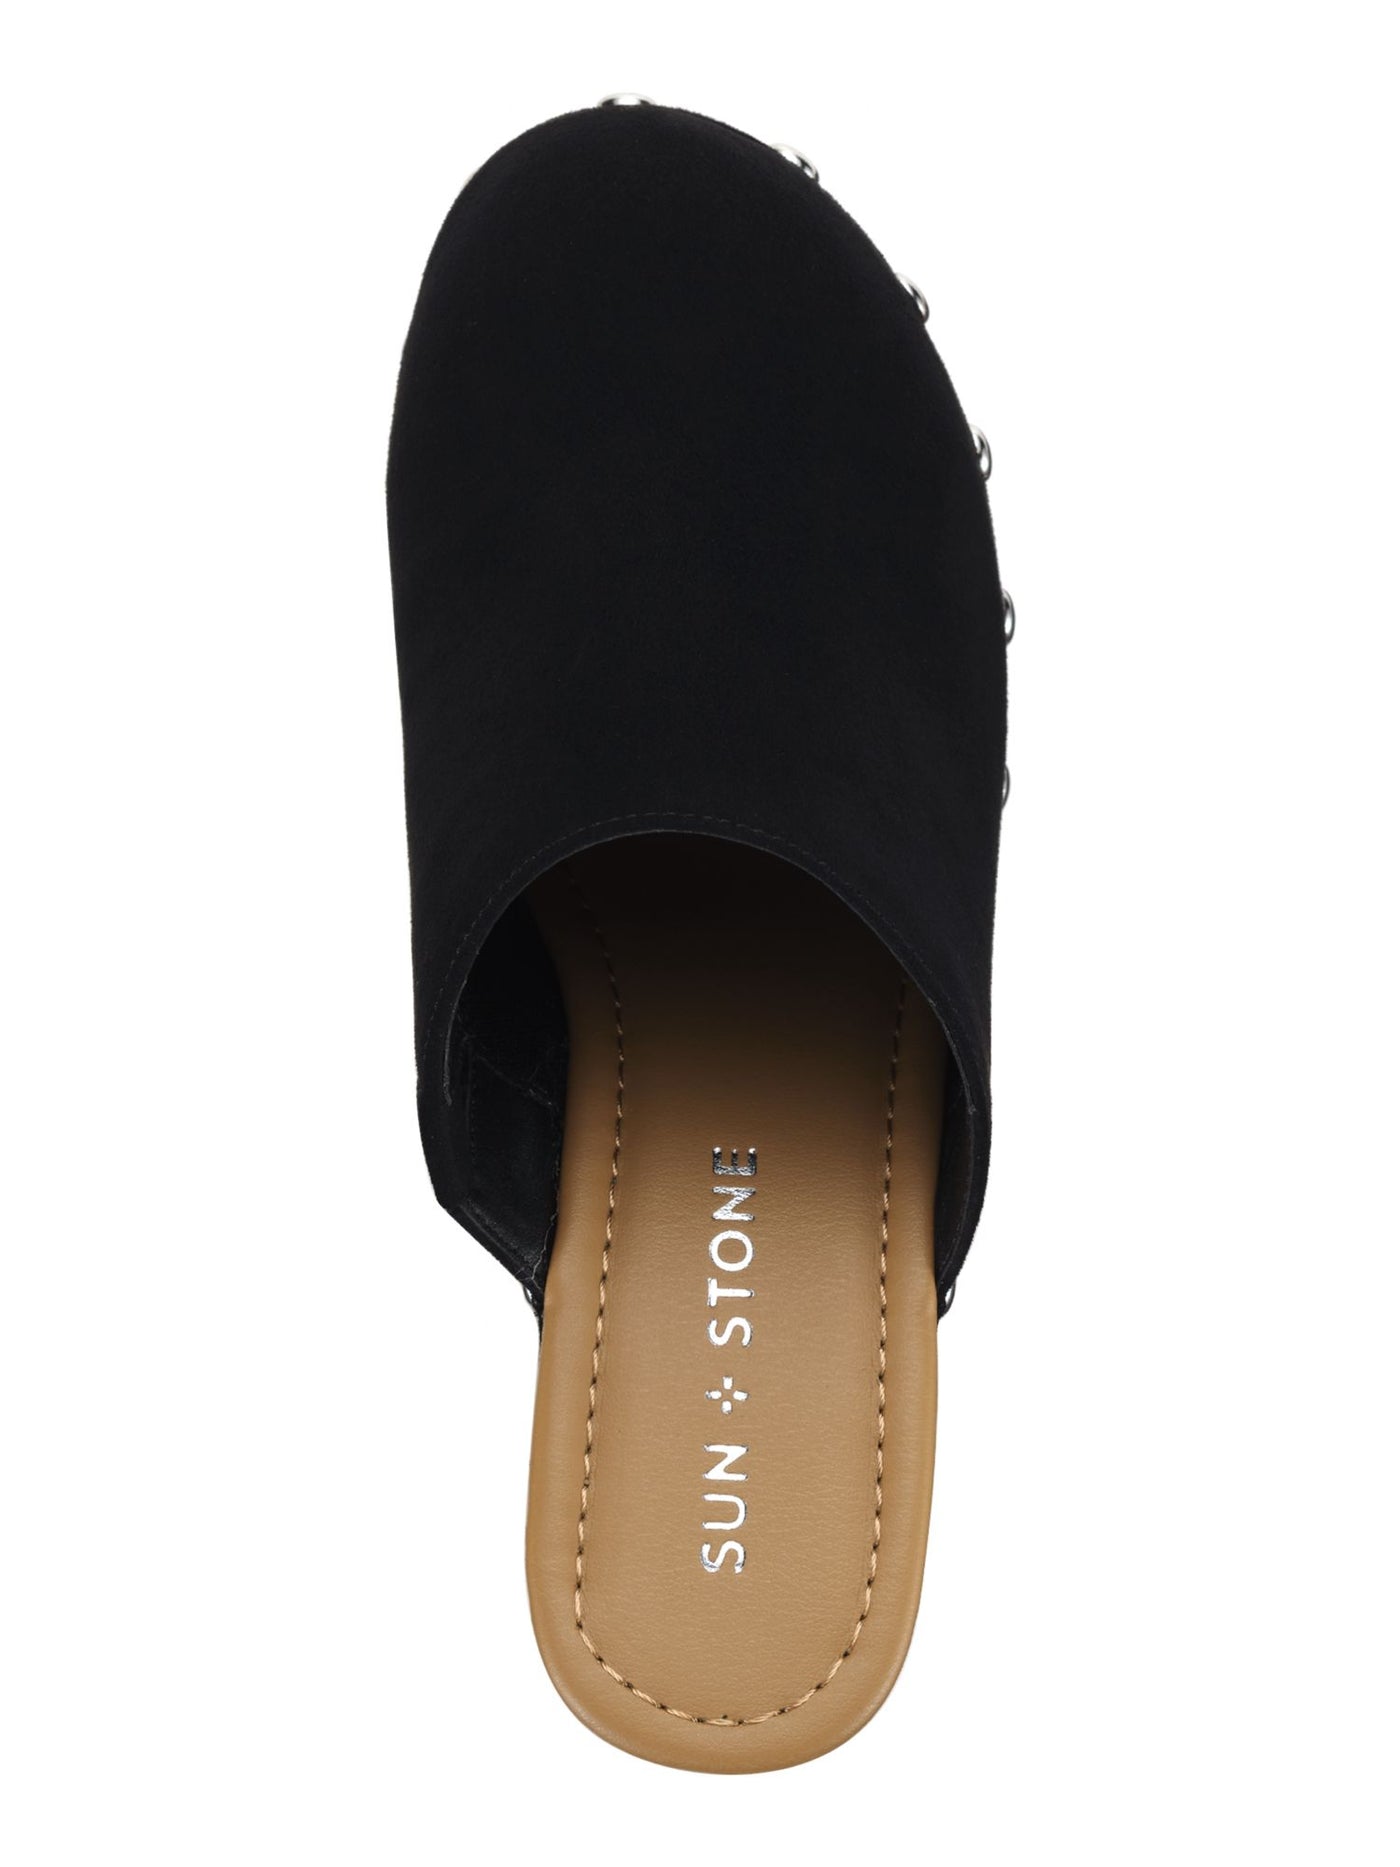 SUN STONE Womens Black 1" Wood-Like Platform Studded Cushioned Taanya Round Toe Block Heel Slip On Clogs Shoes 6.5 M